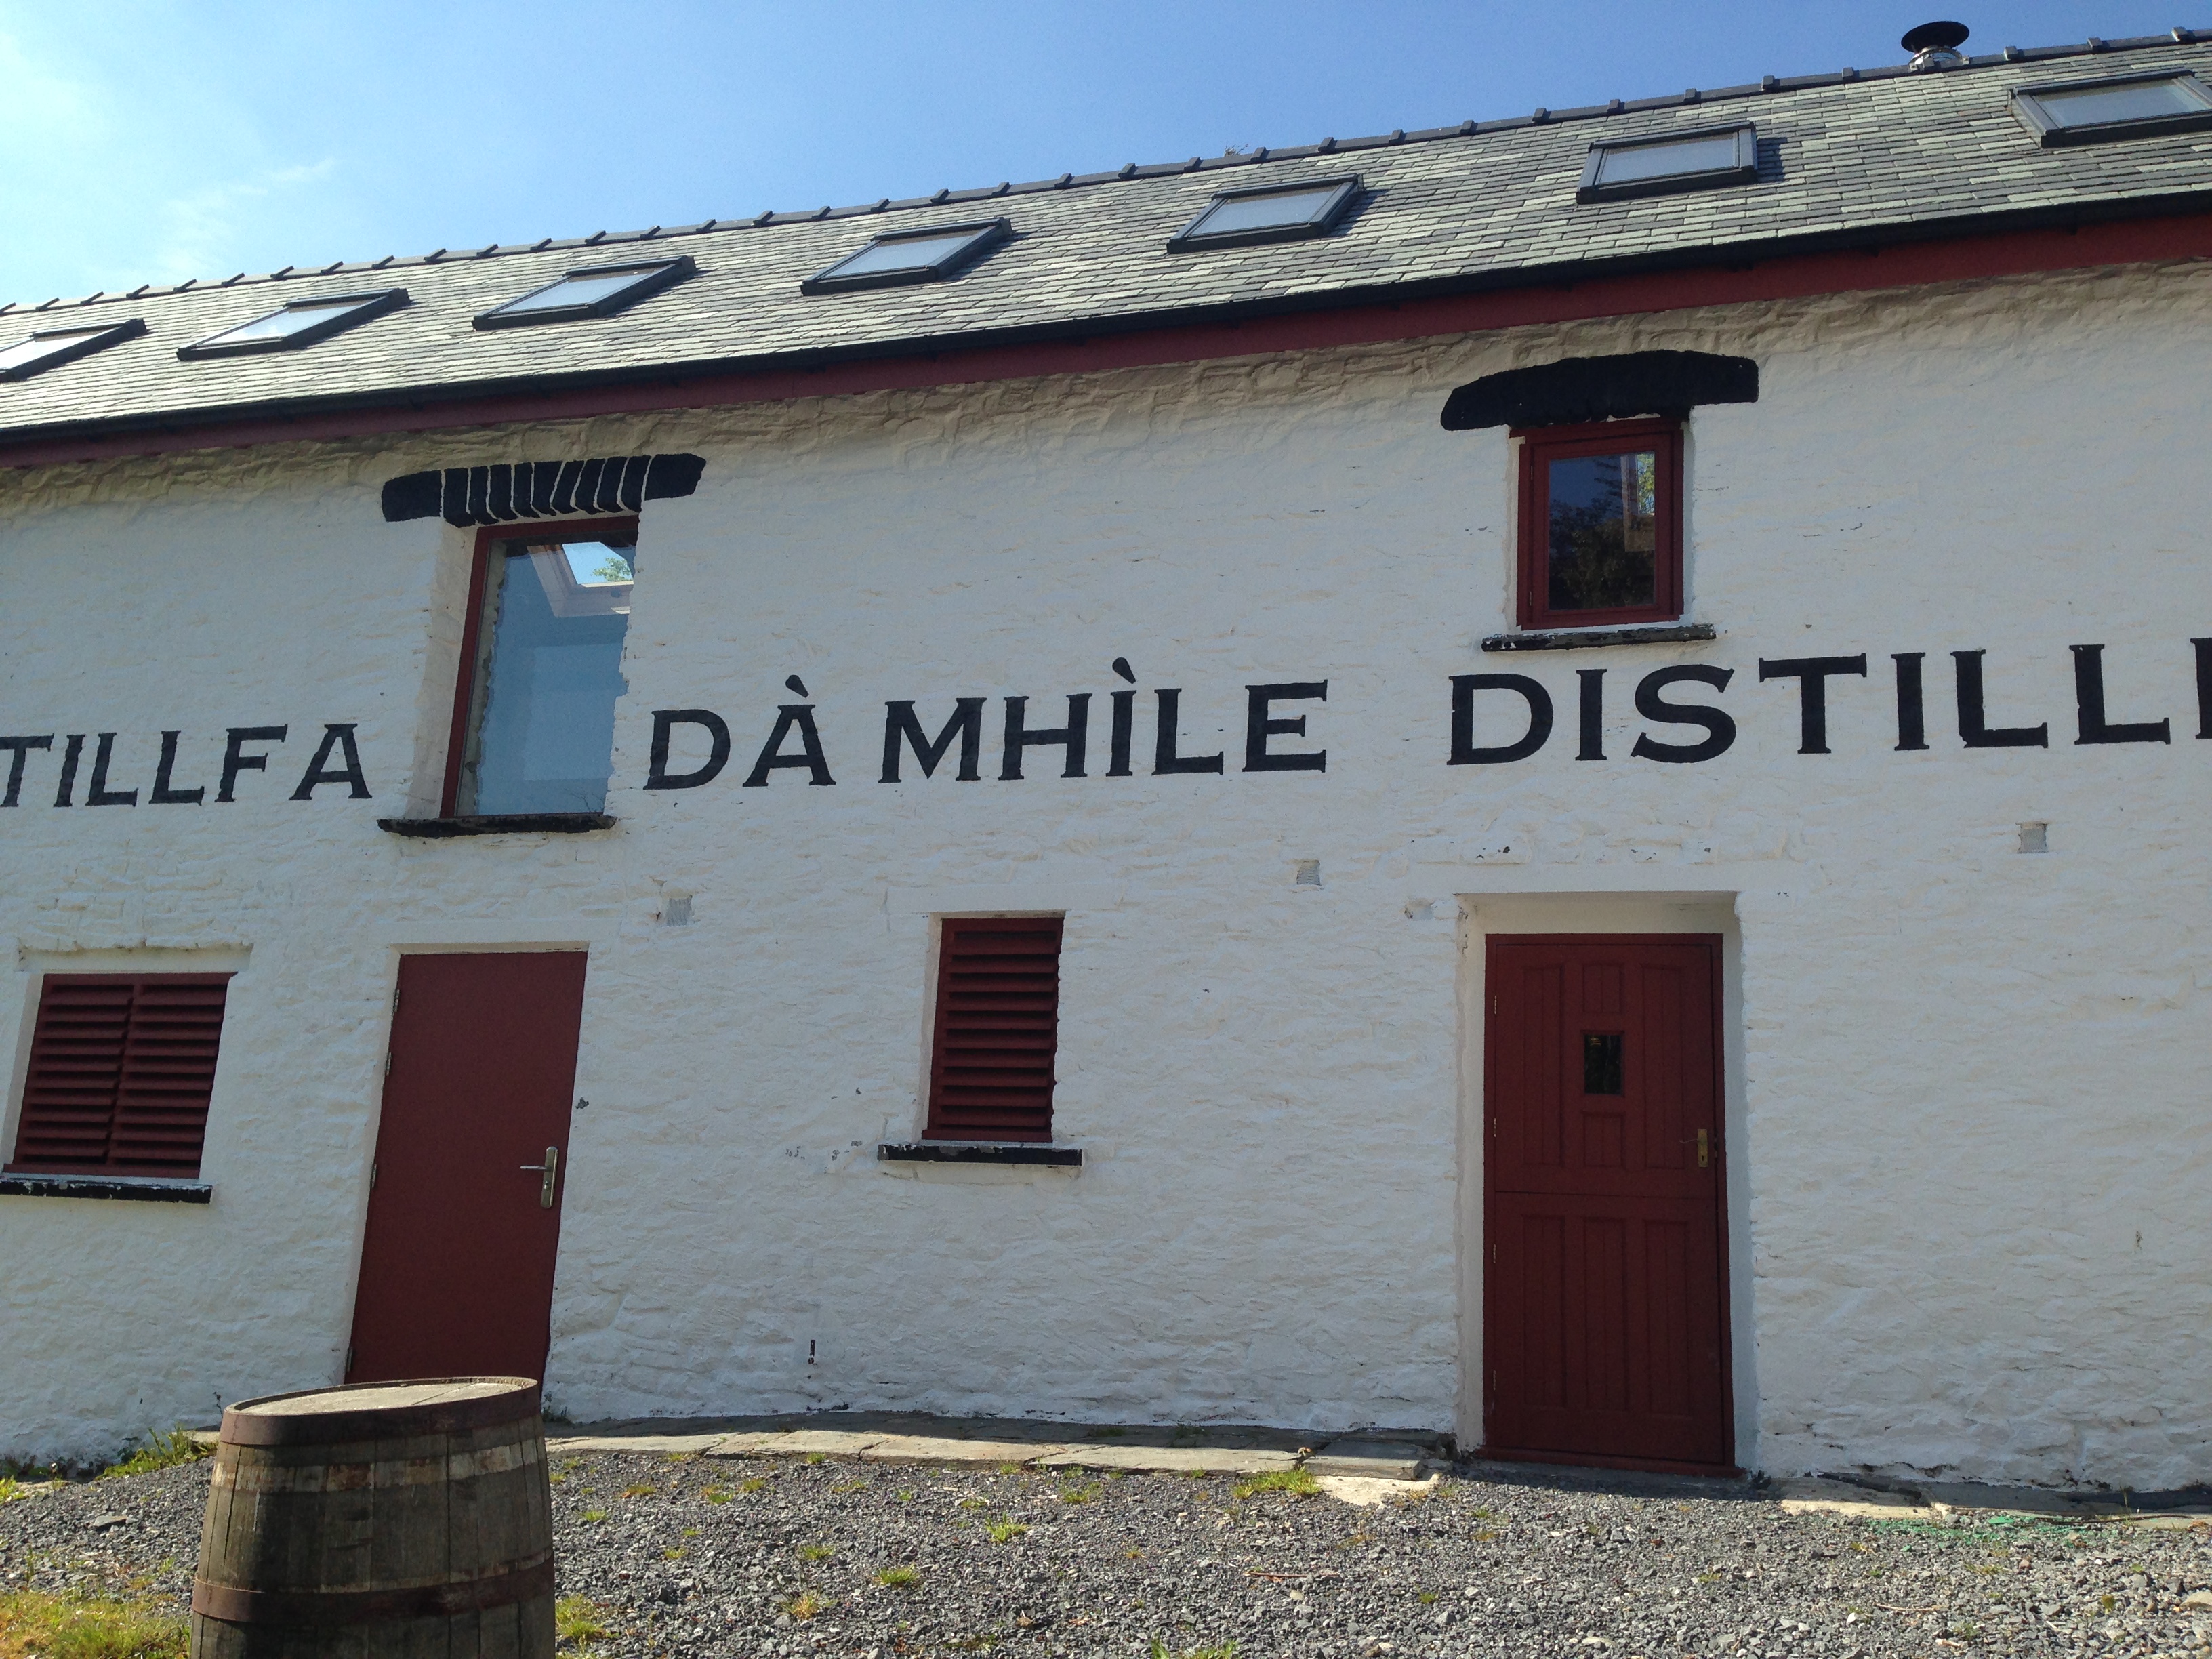 Wales Distillery